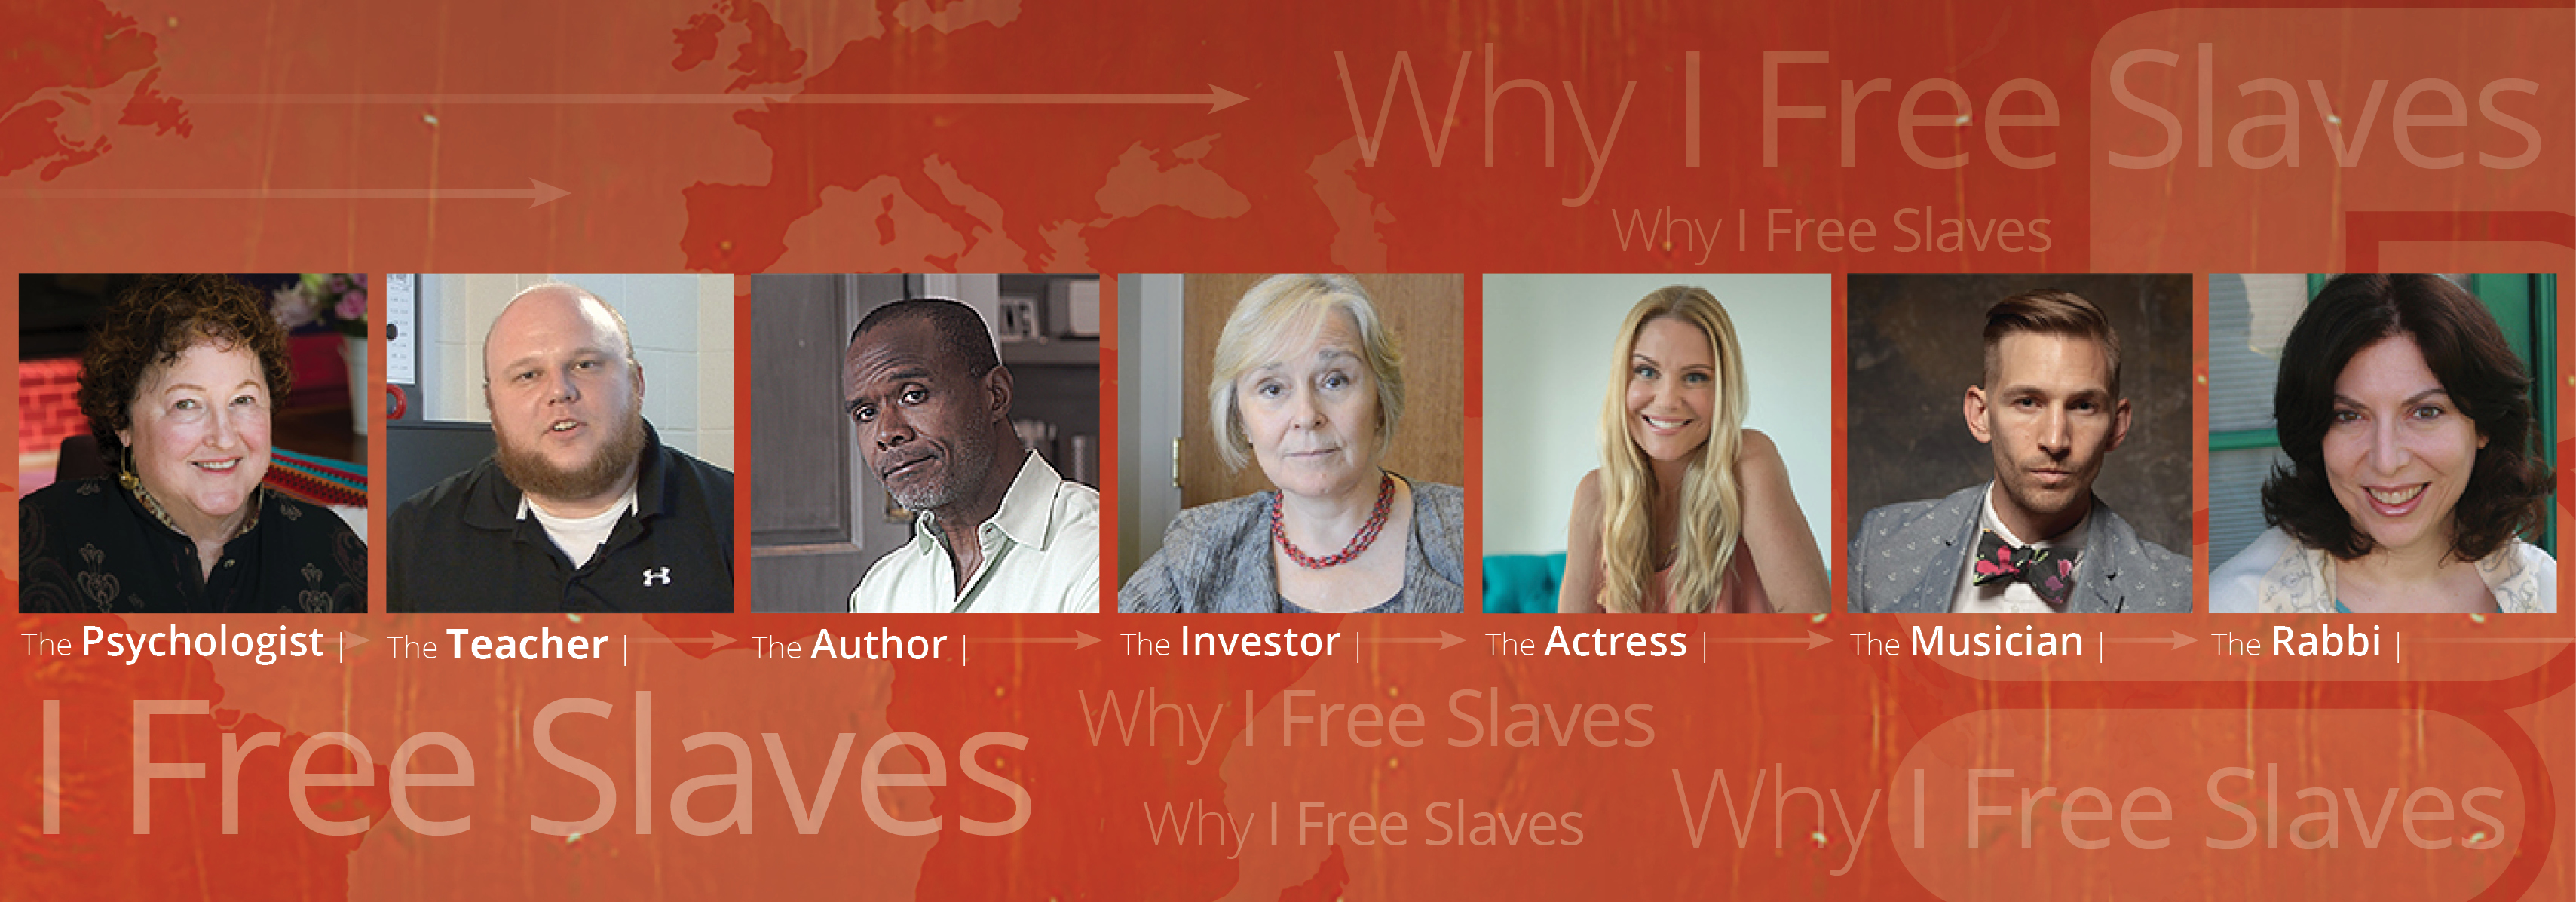 Why I Free Slaves – Researcher Austin Choi-Fitzpatrick